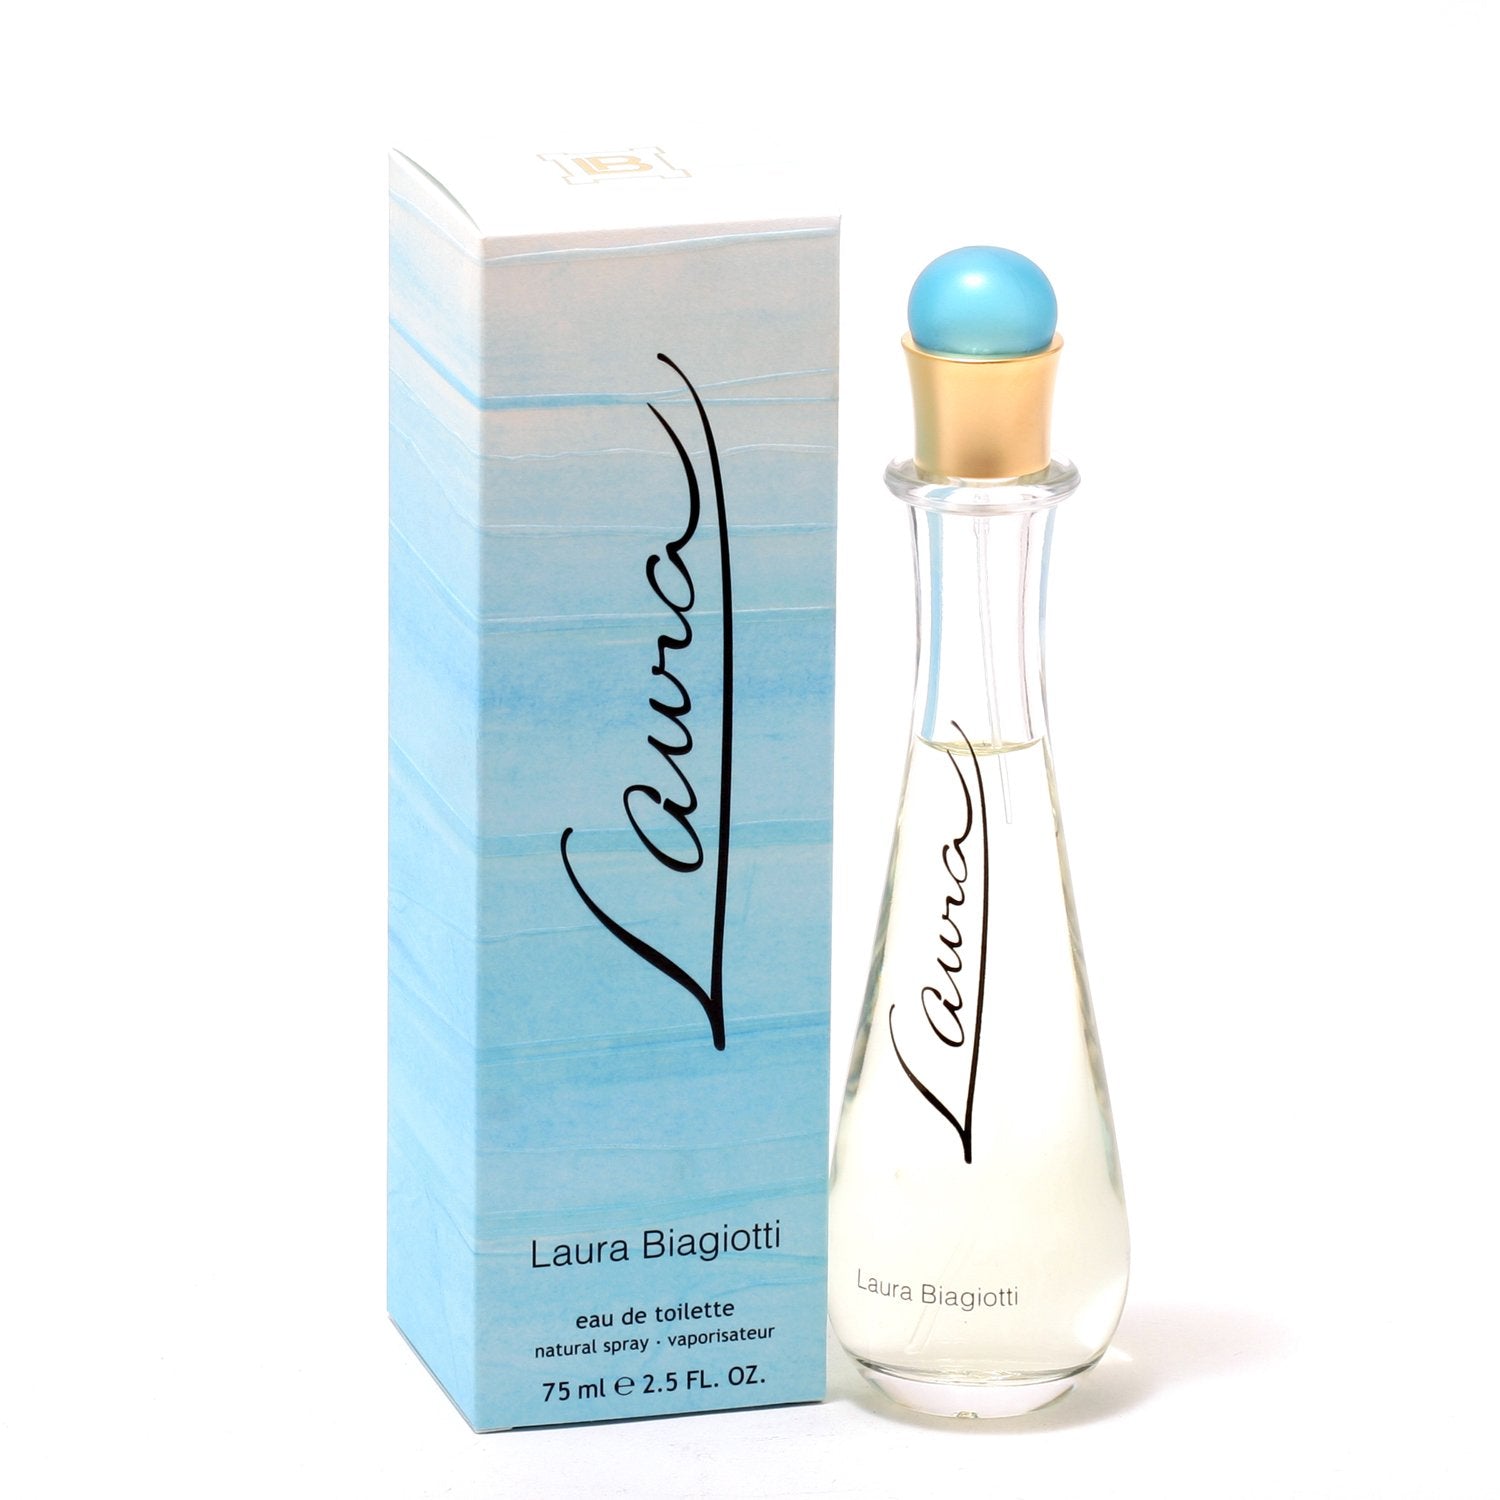 BIAGOTTI OZ Room – LAURA WOMEN Fragrance TOILETTE EAU DE BY 2.5 - FOR SPRAY, LAURA